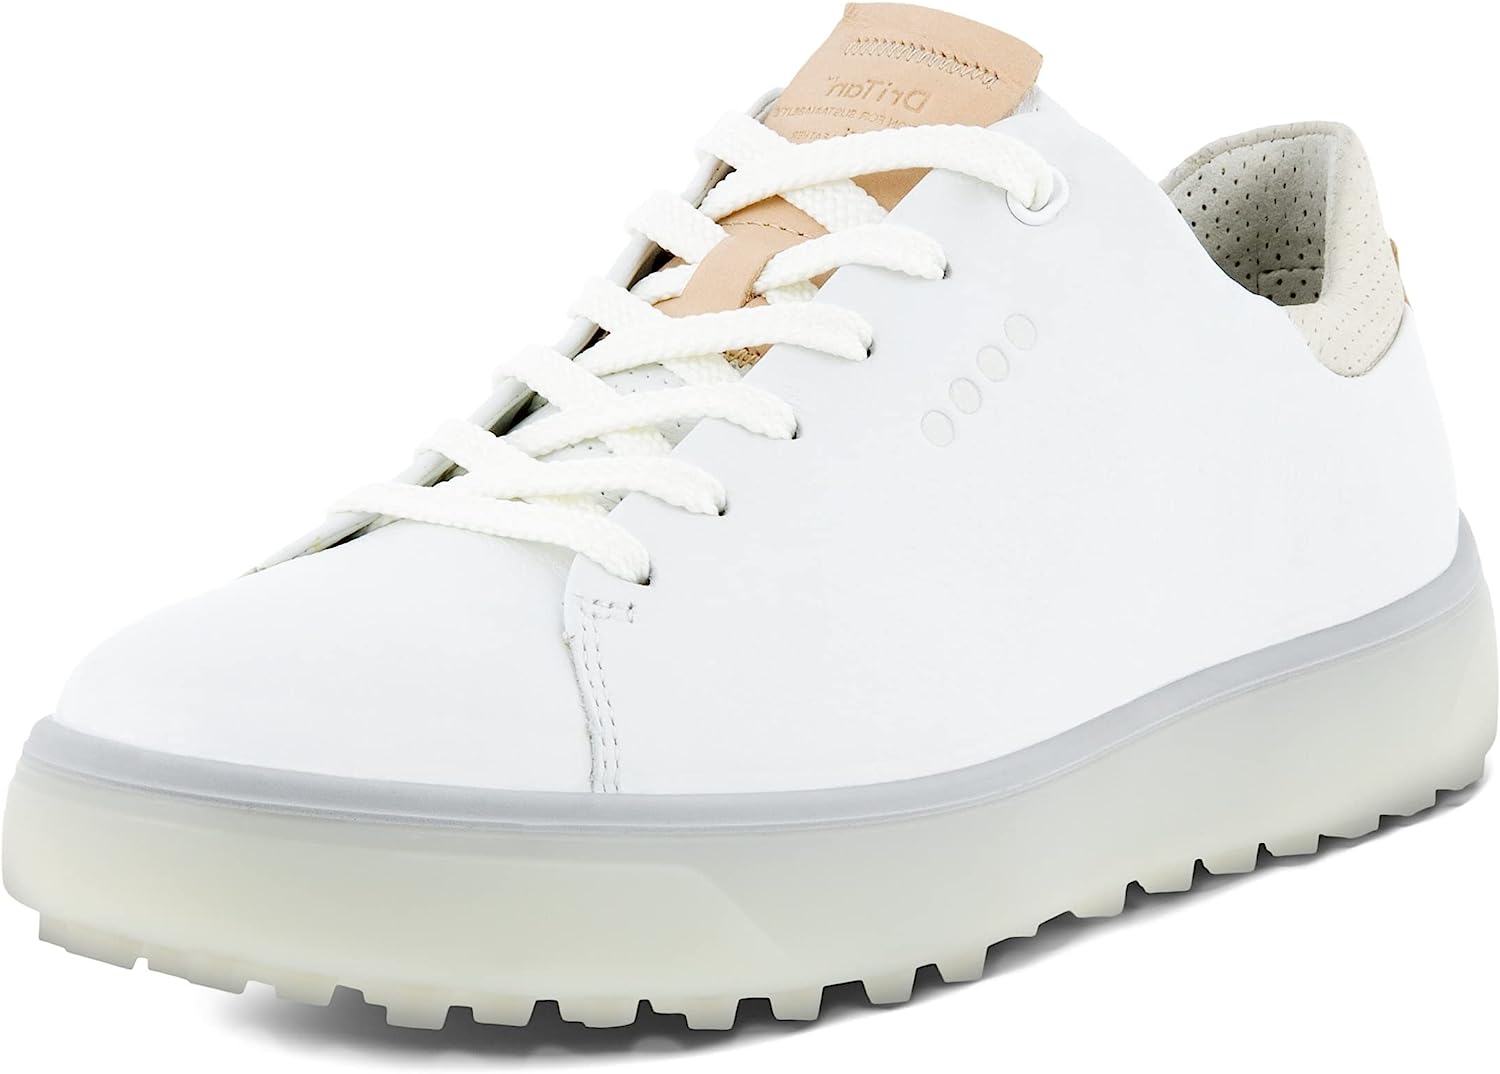 ECCO Women's Tray Hybrid Hydromax Water-Resistant Golf Shoe